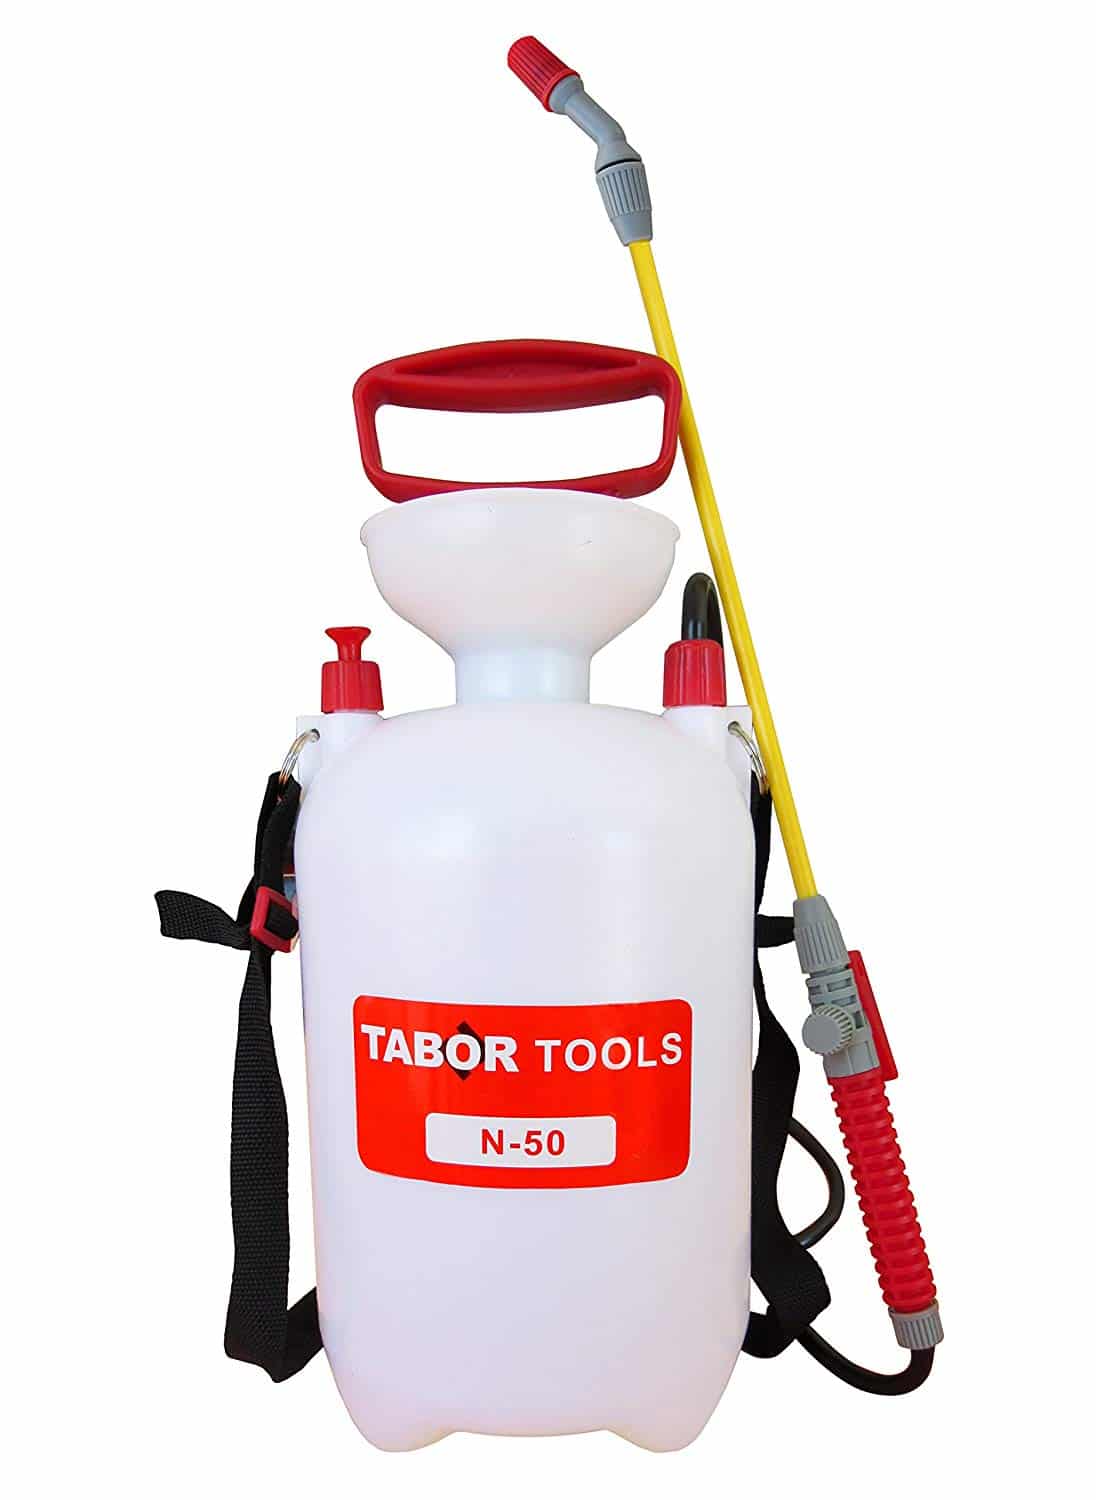 TABOR TOOLS Lawn and Garden Pump Pressure Sprayer